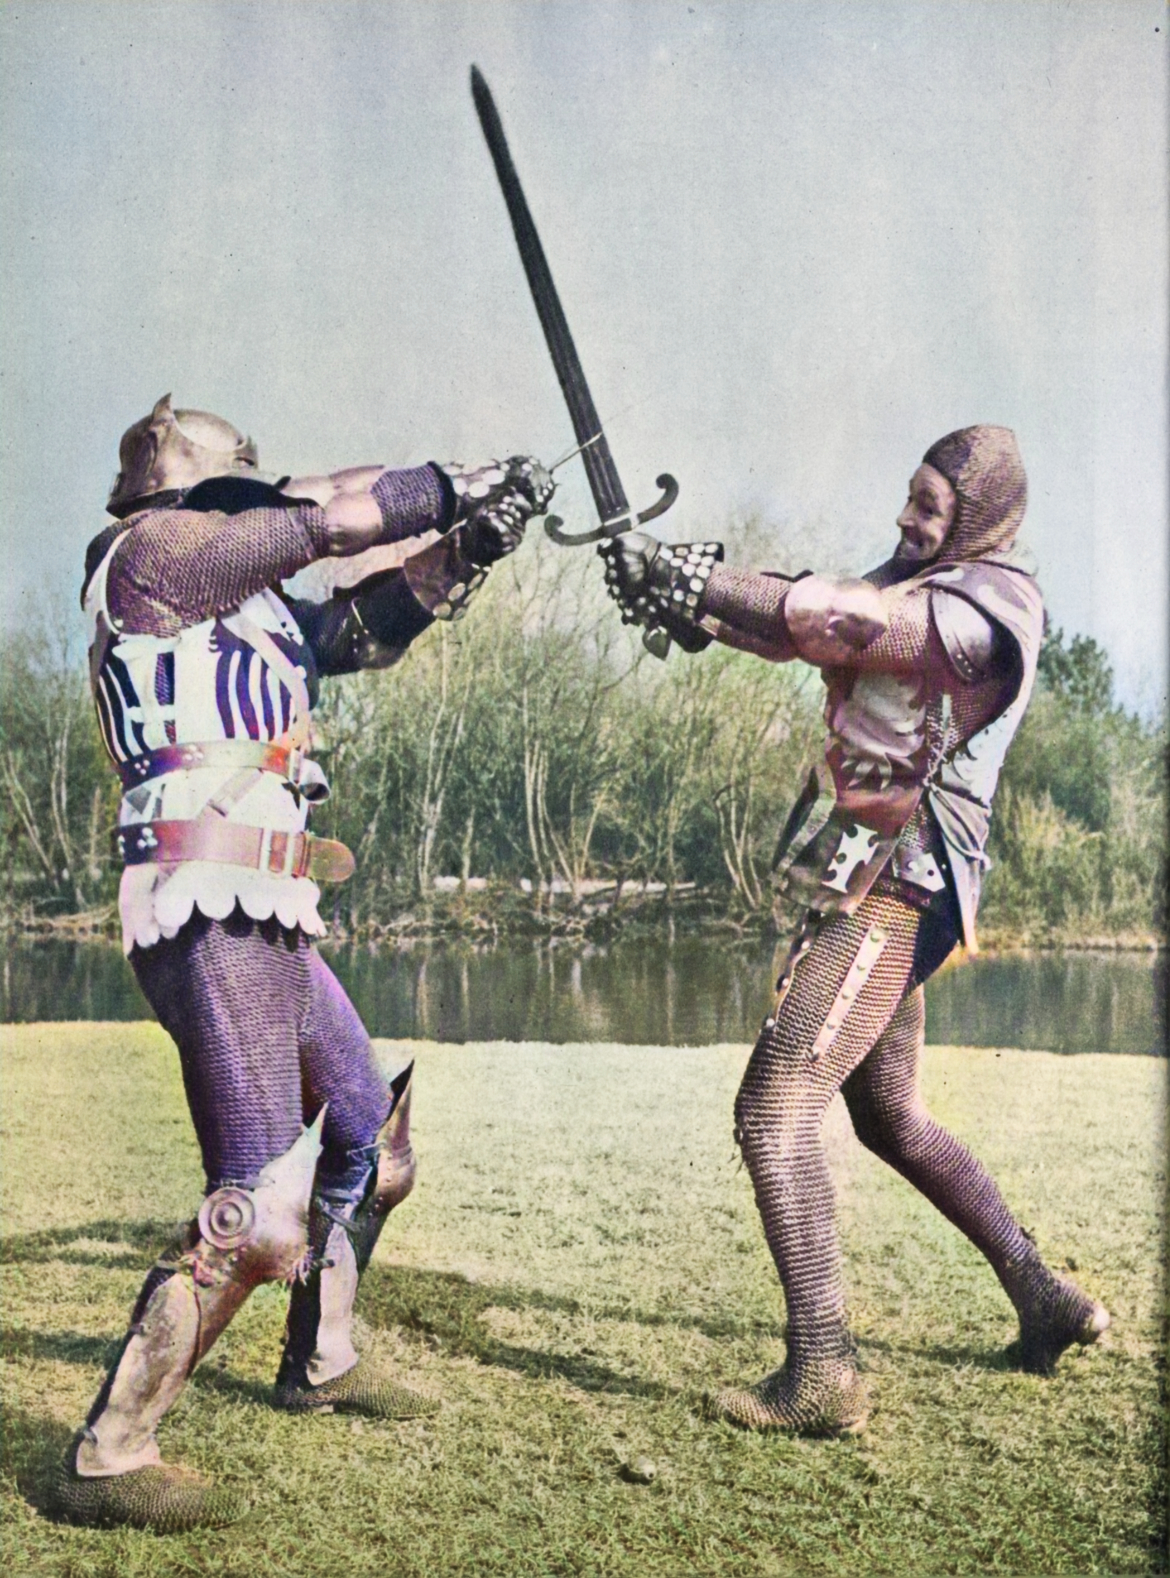 A sword fight